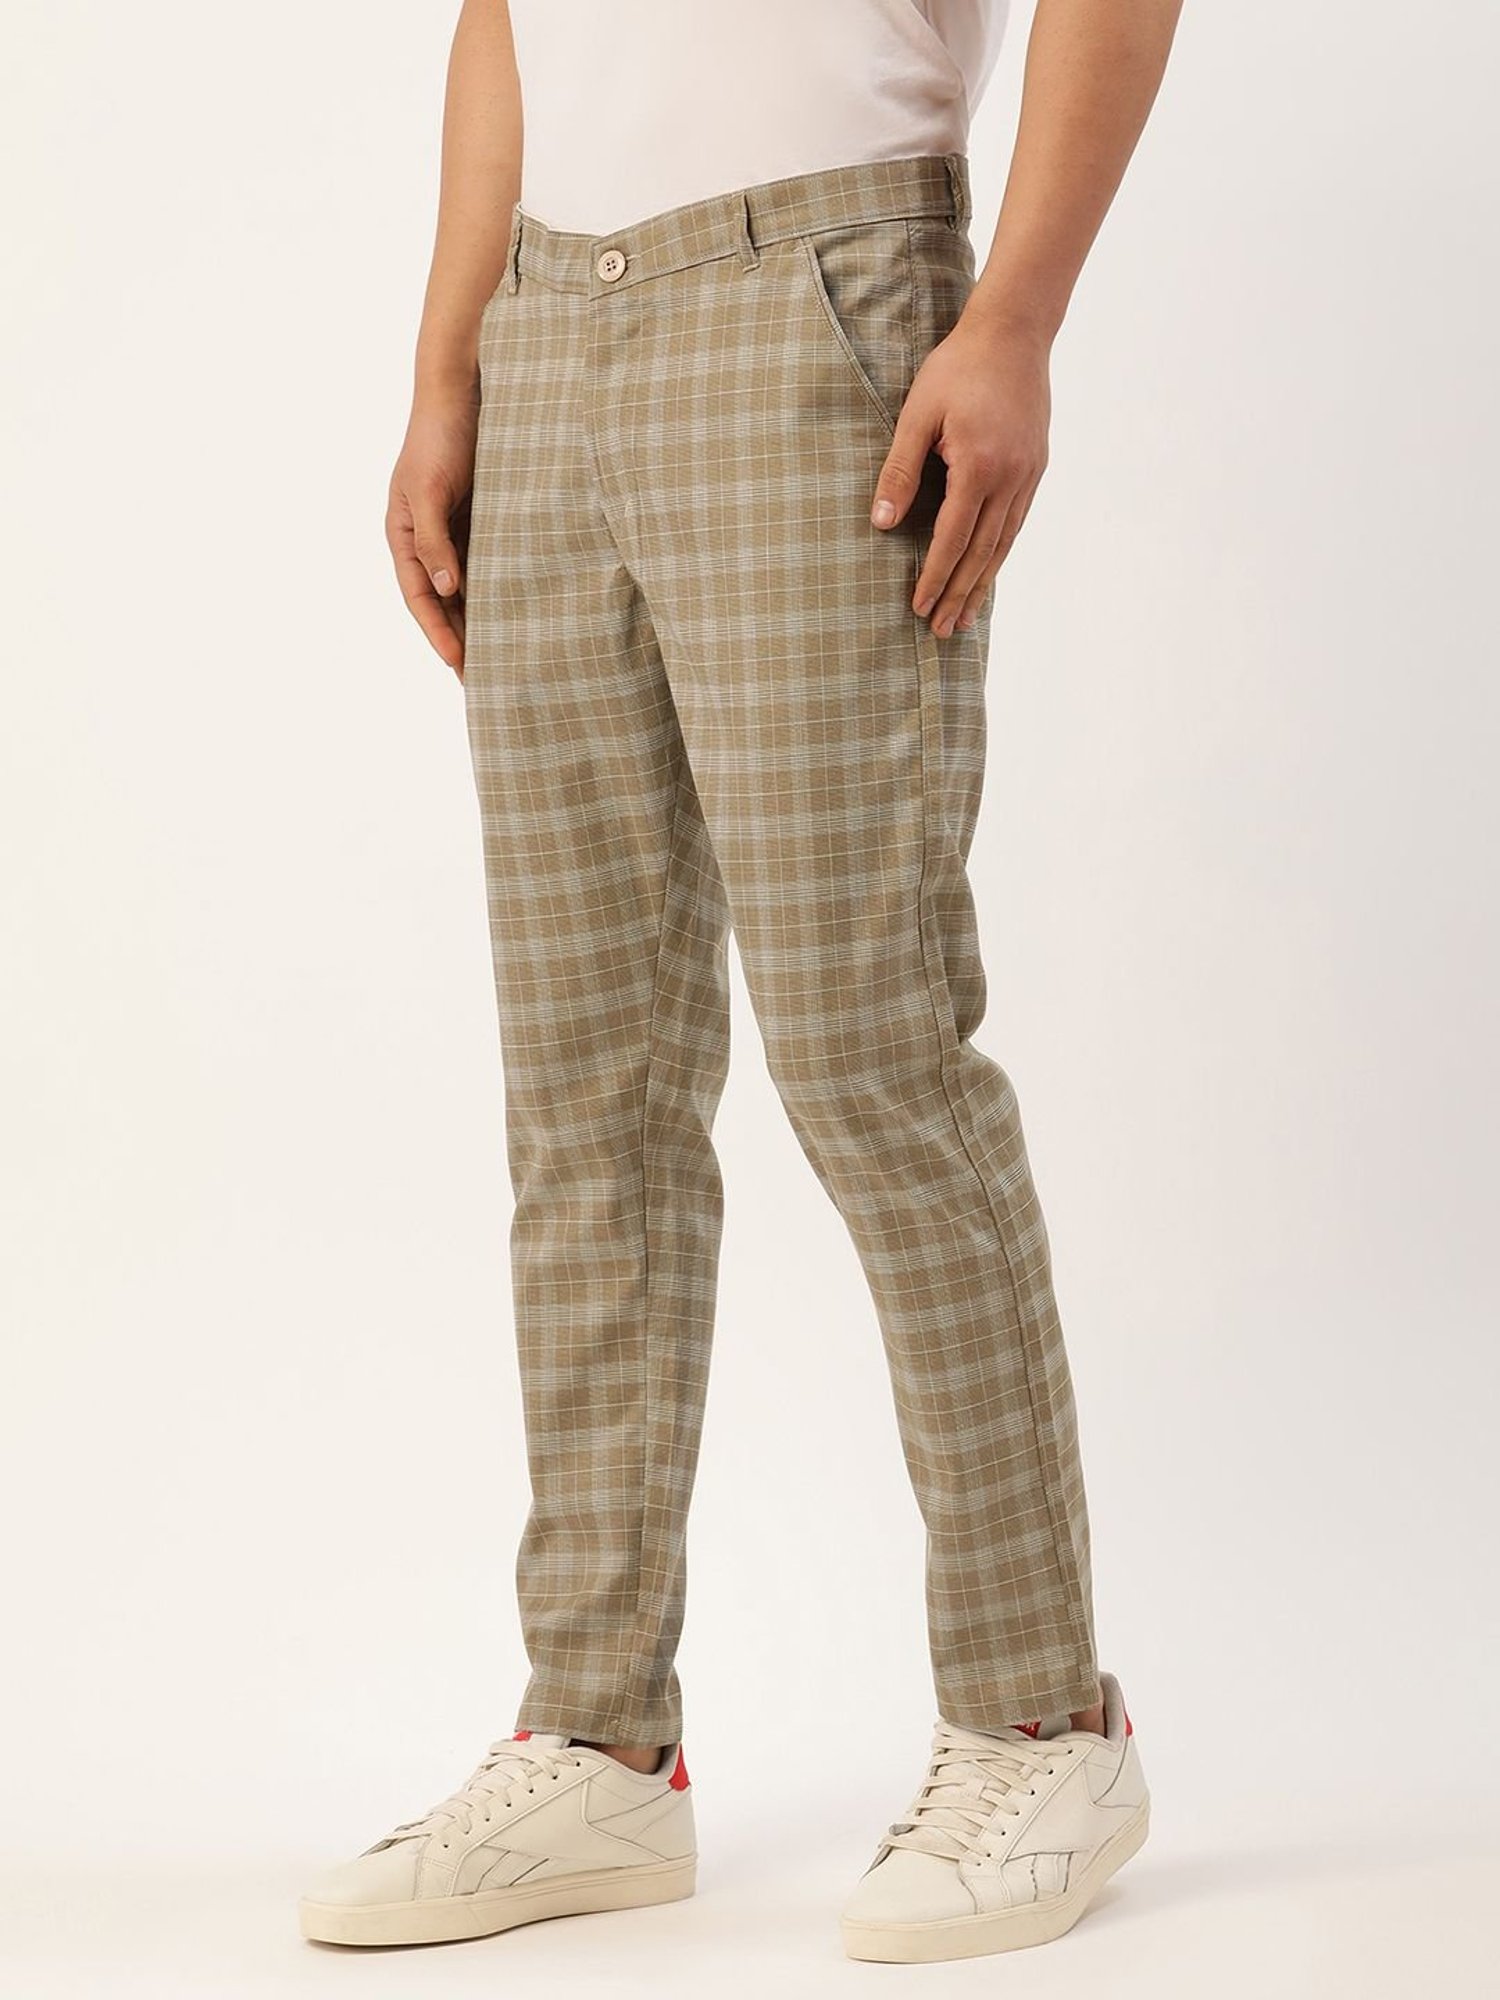 Beige Checkered Slim-Fit Trousers | Cotton Blend | Stylish Men's Fashion  Staple – HolloMen